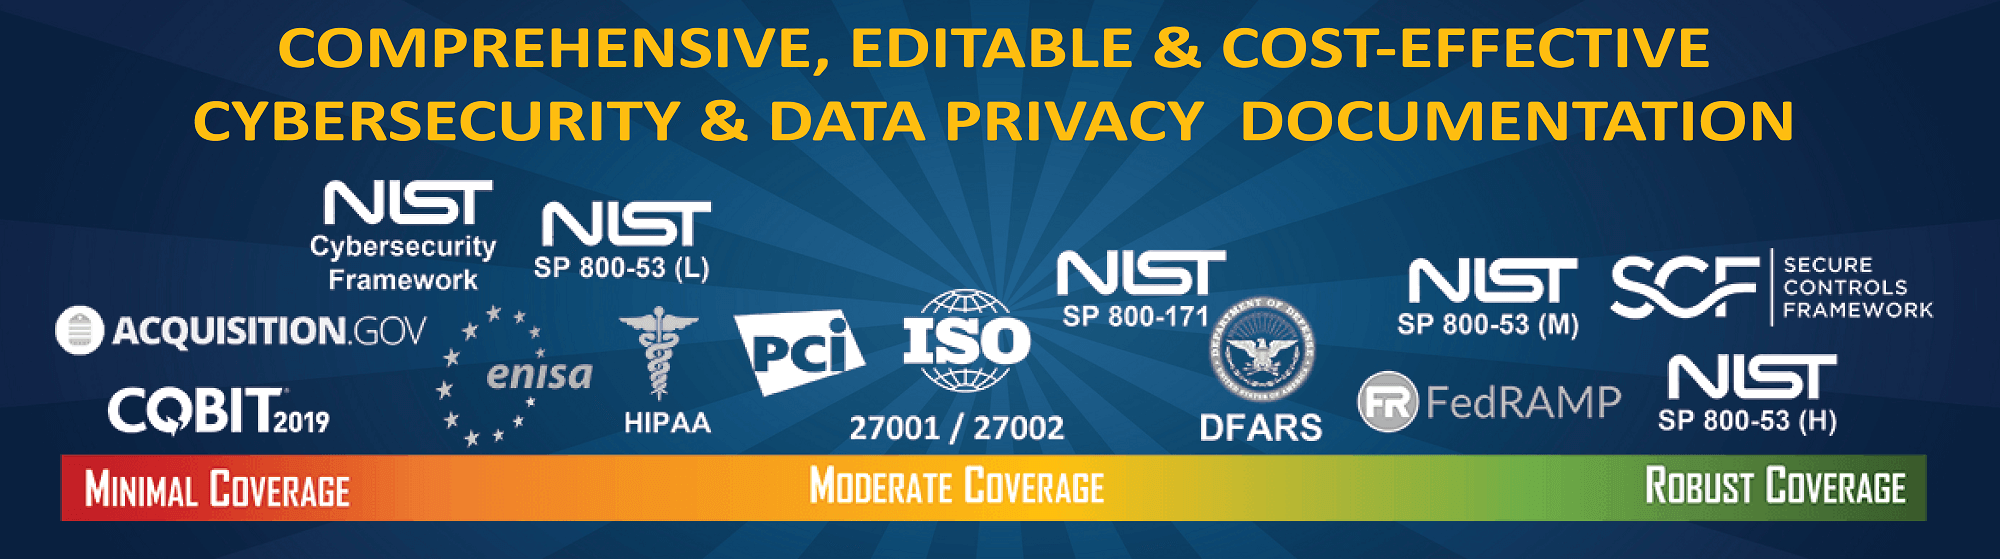 ComplianceForge Cybersecurity Data Privacy Policies, Standards, Procedures NIST 800-53 vs ISO 27002 vs NIST CSF vs NIST 800-171 vs SCF